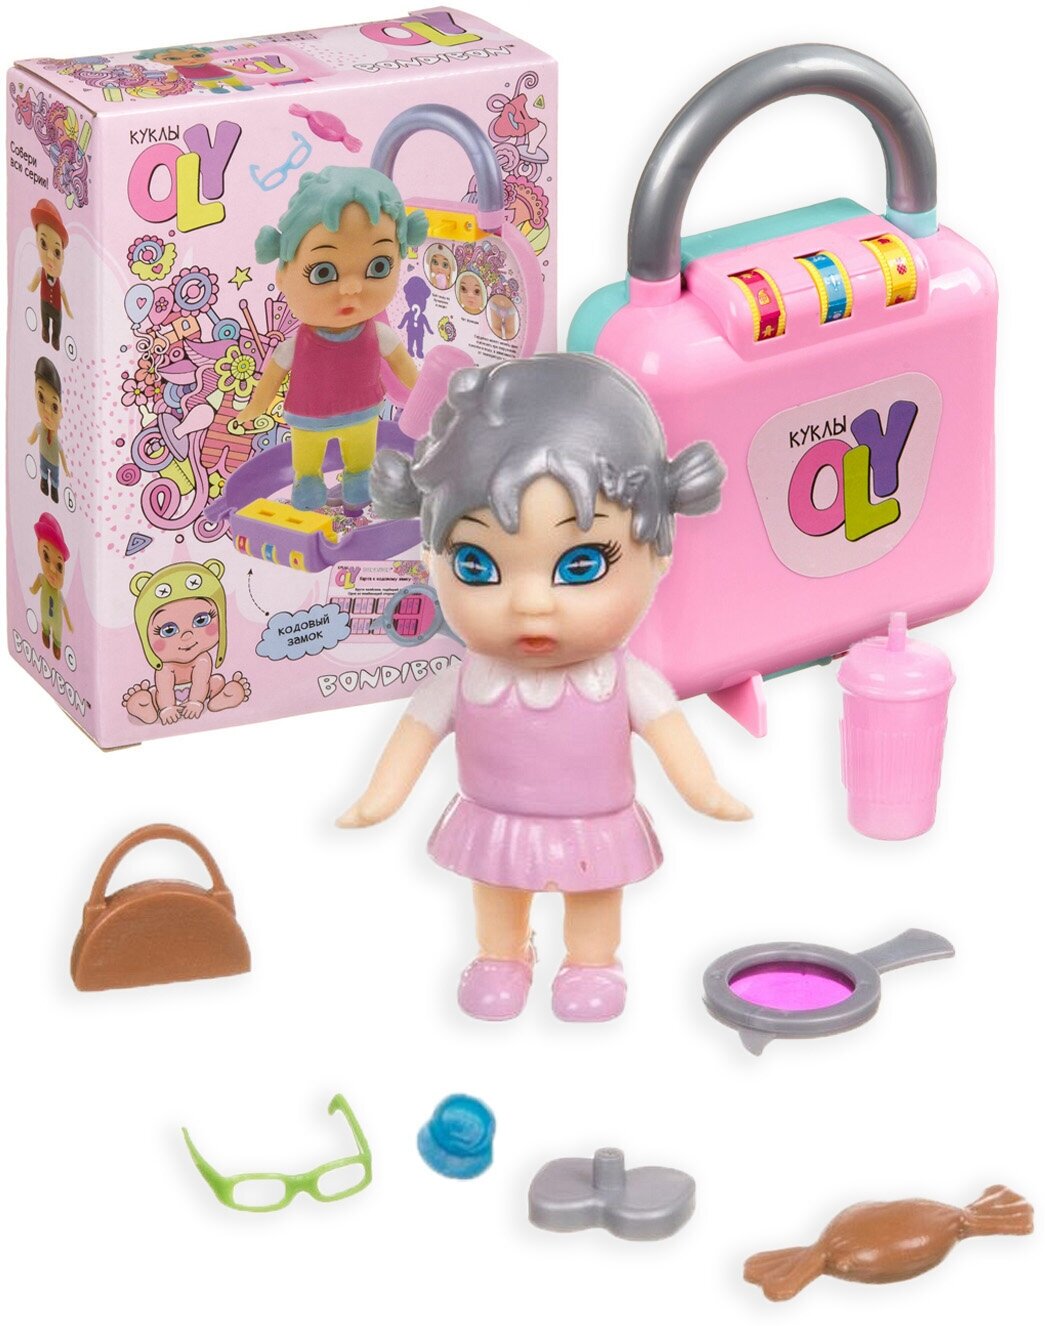 Куколка OLY в парике и аксессуарами в чемоданчике на кодовом замке №5